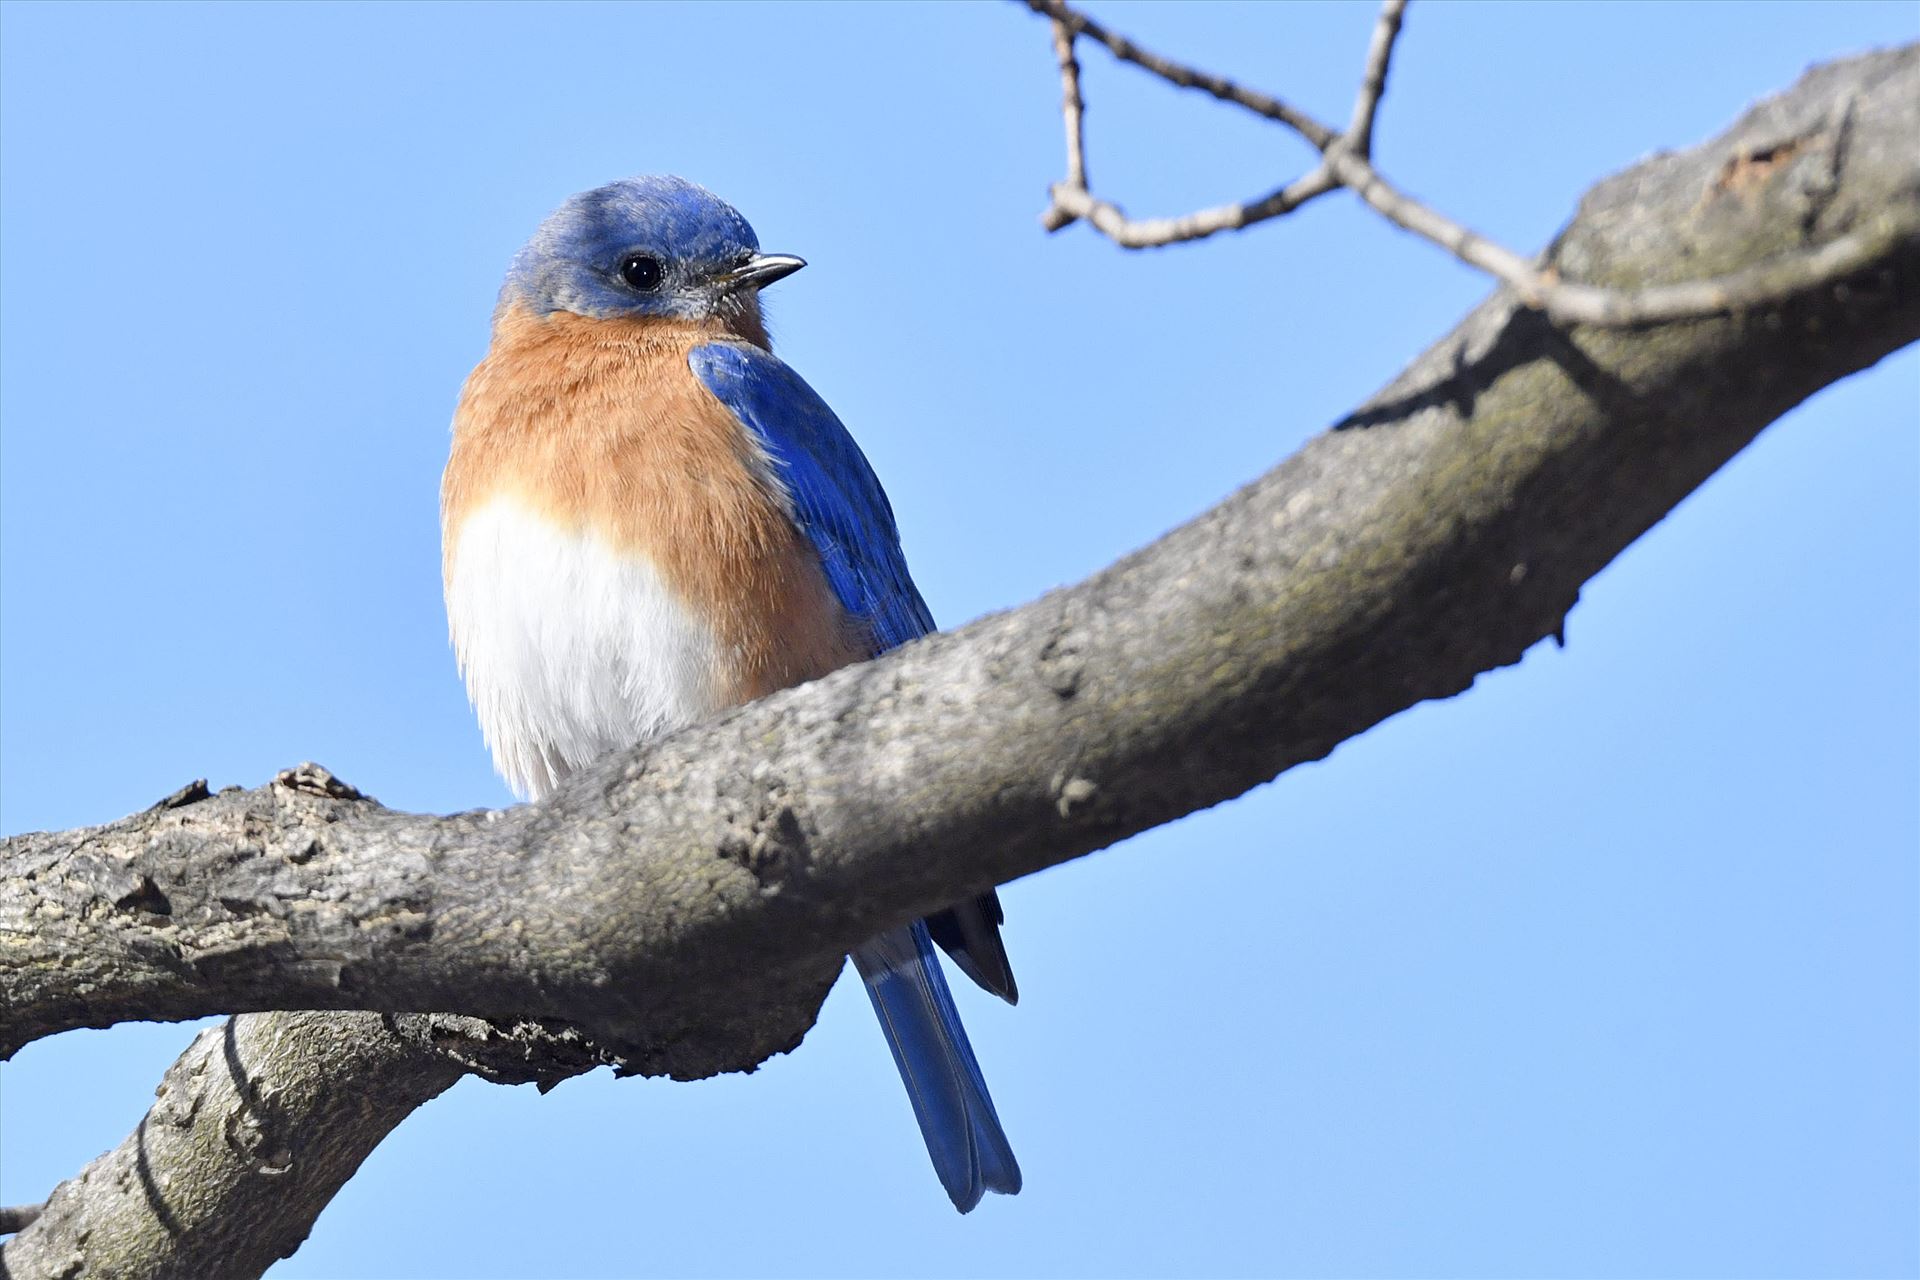 Bluebird2 - Taken in the Wilds of Pennsylvania by Buckmaster